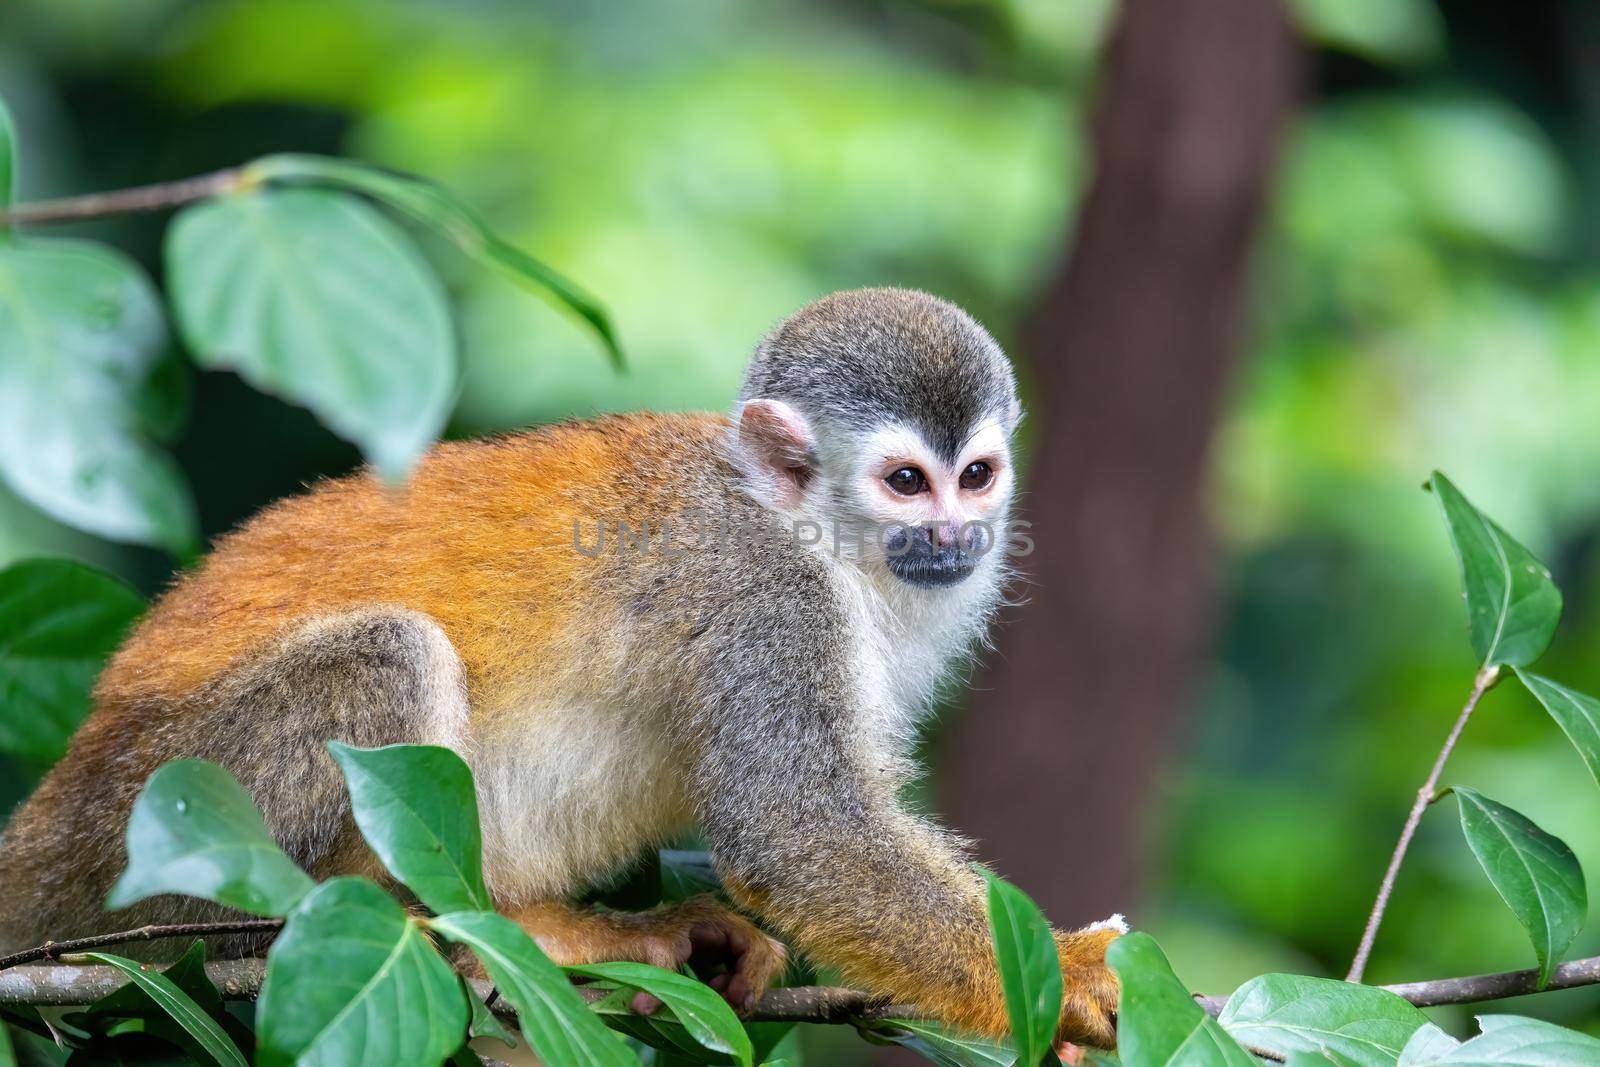 Central American squirrel monkey (Saimiri oerstedii), Quepos, Costa Rica wildlife